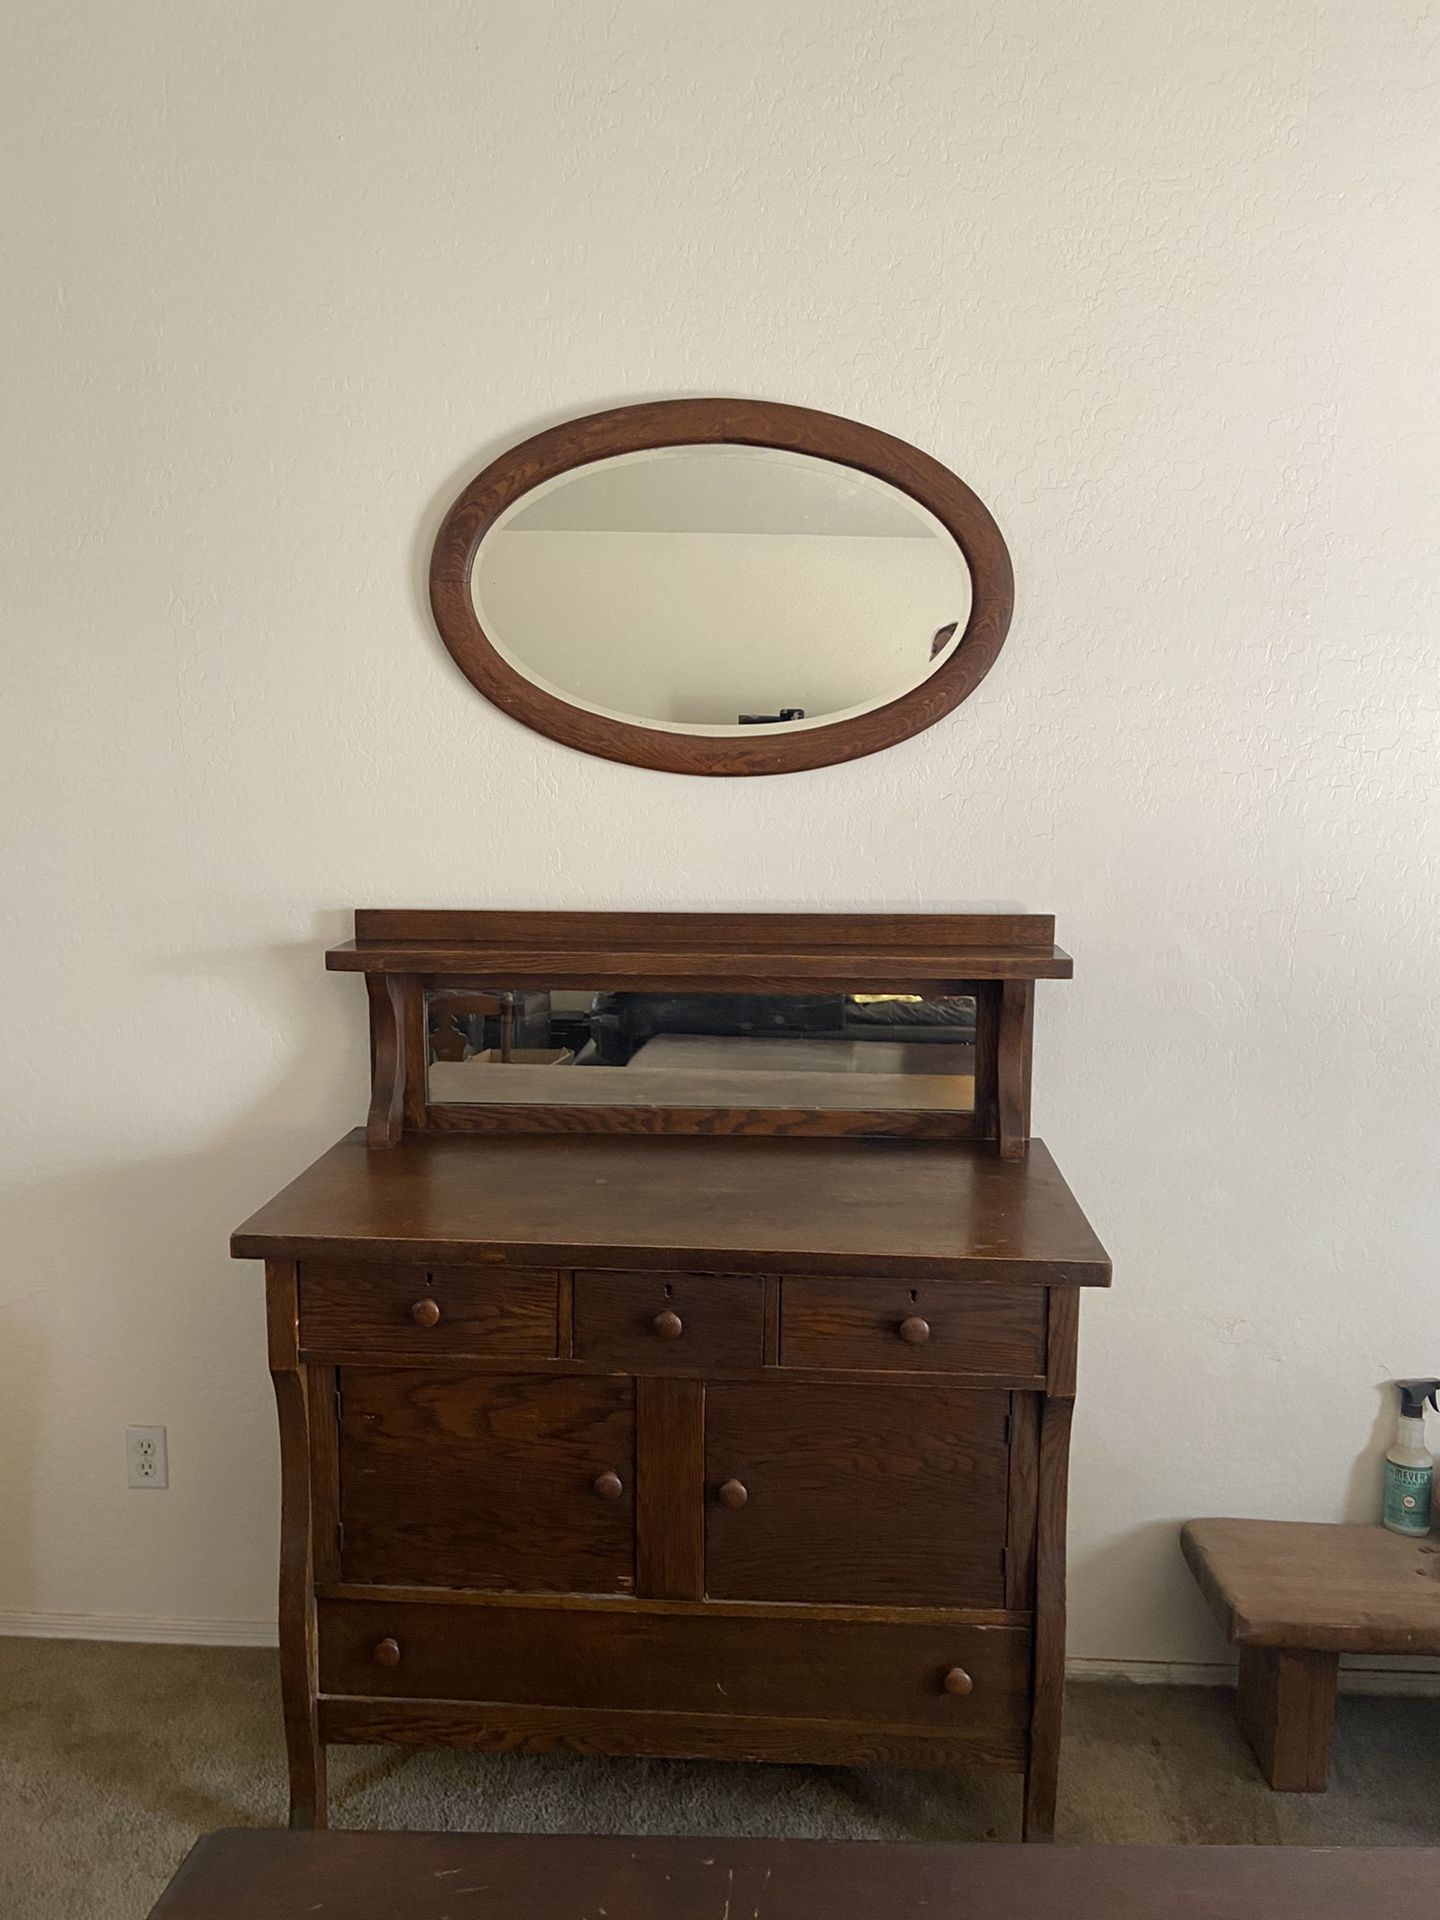 Antique dresser/ cabinet with mirror. Good condition.